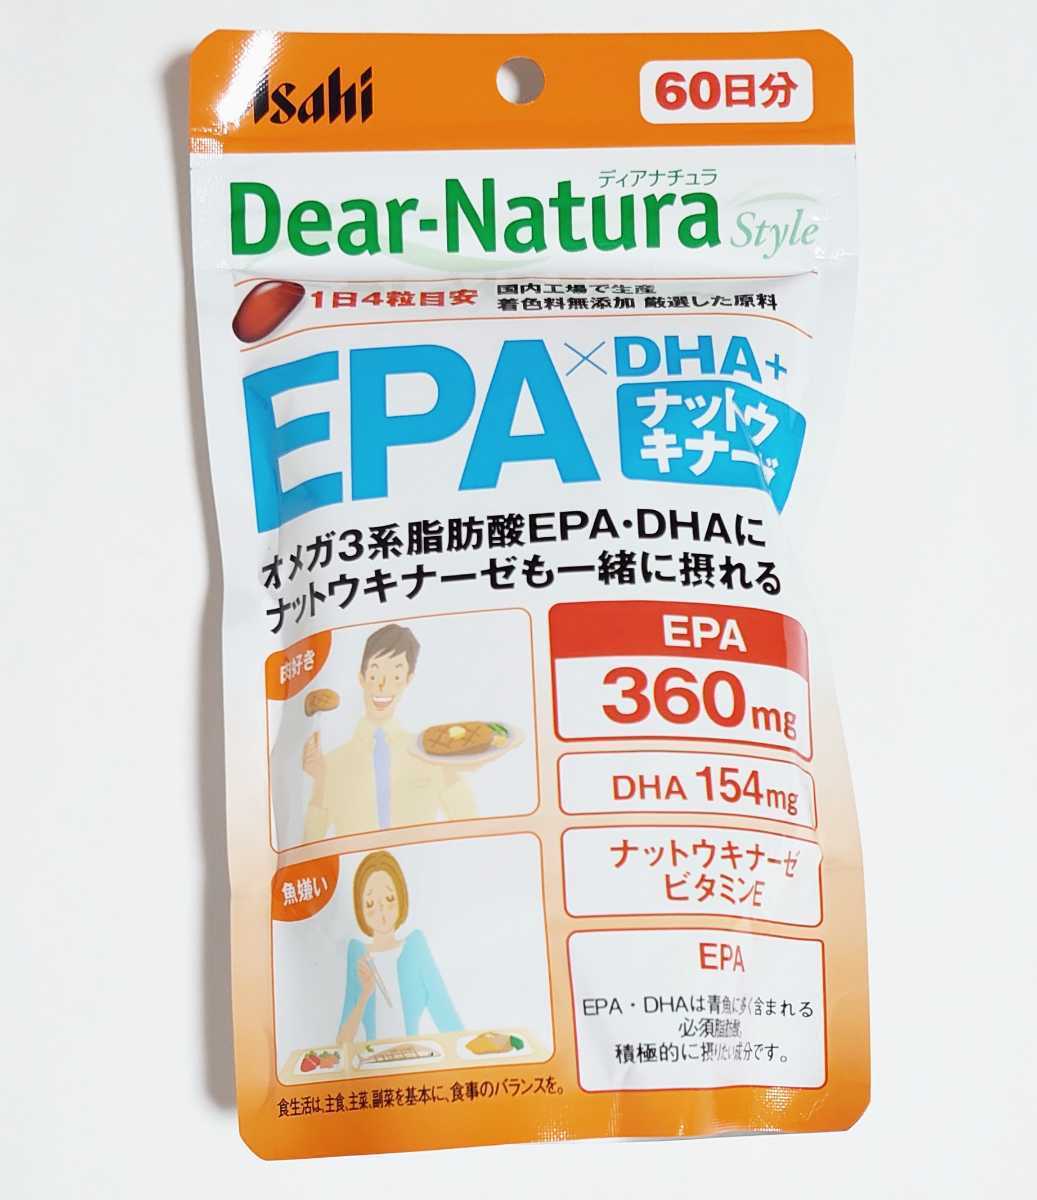 [ new goods ] supplement ASAHI Asahi group food Dear-Nature Styleti hole chula style EPAx DHA+ nut float na-ze240 bead 60 day (3)